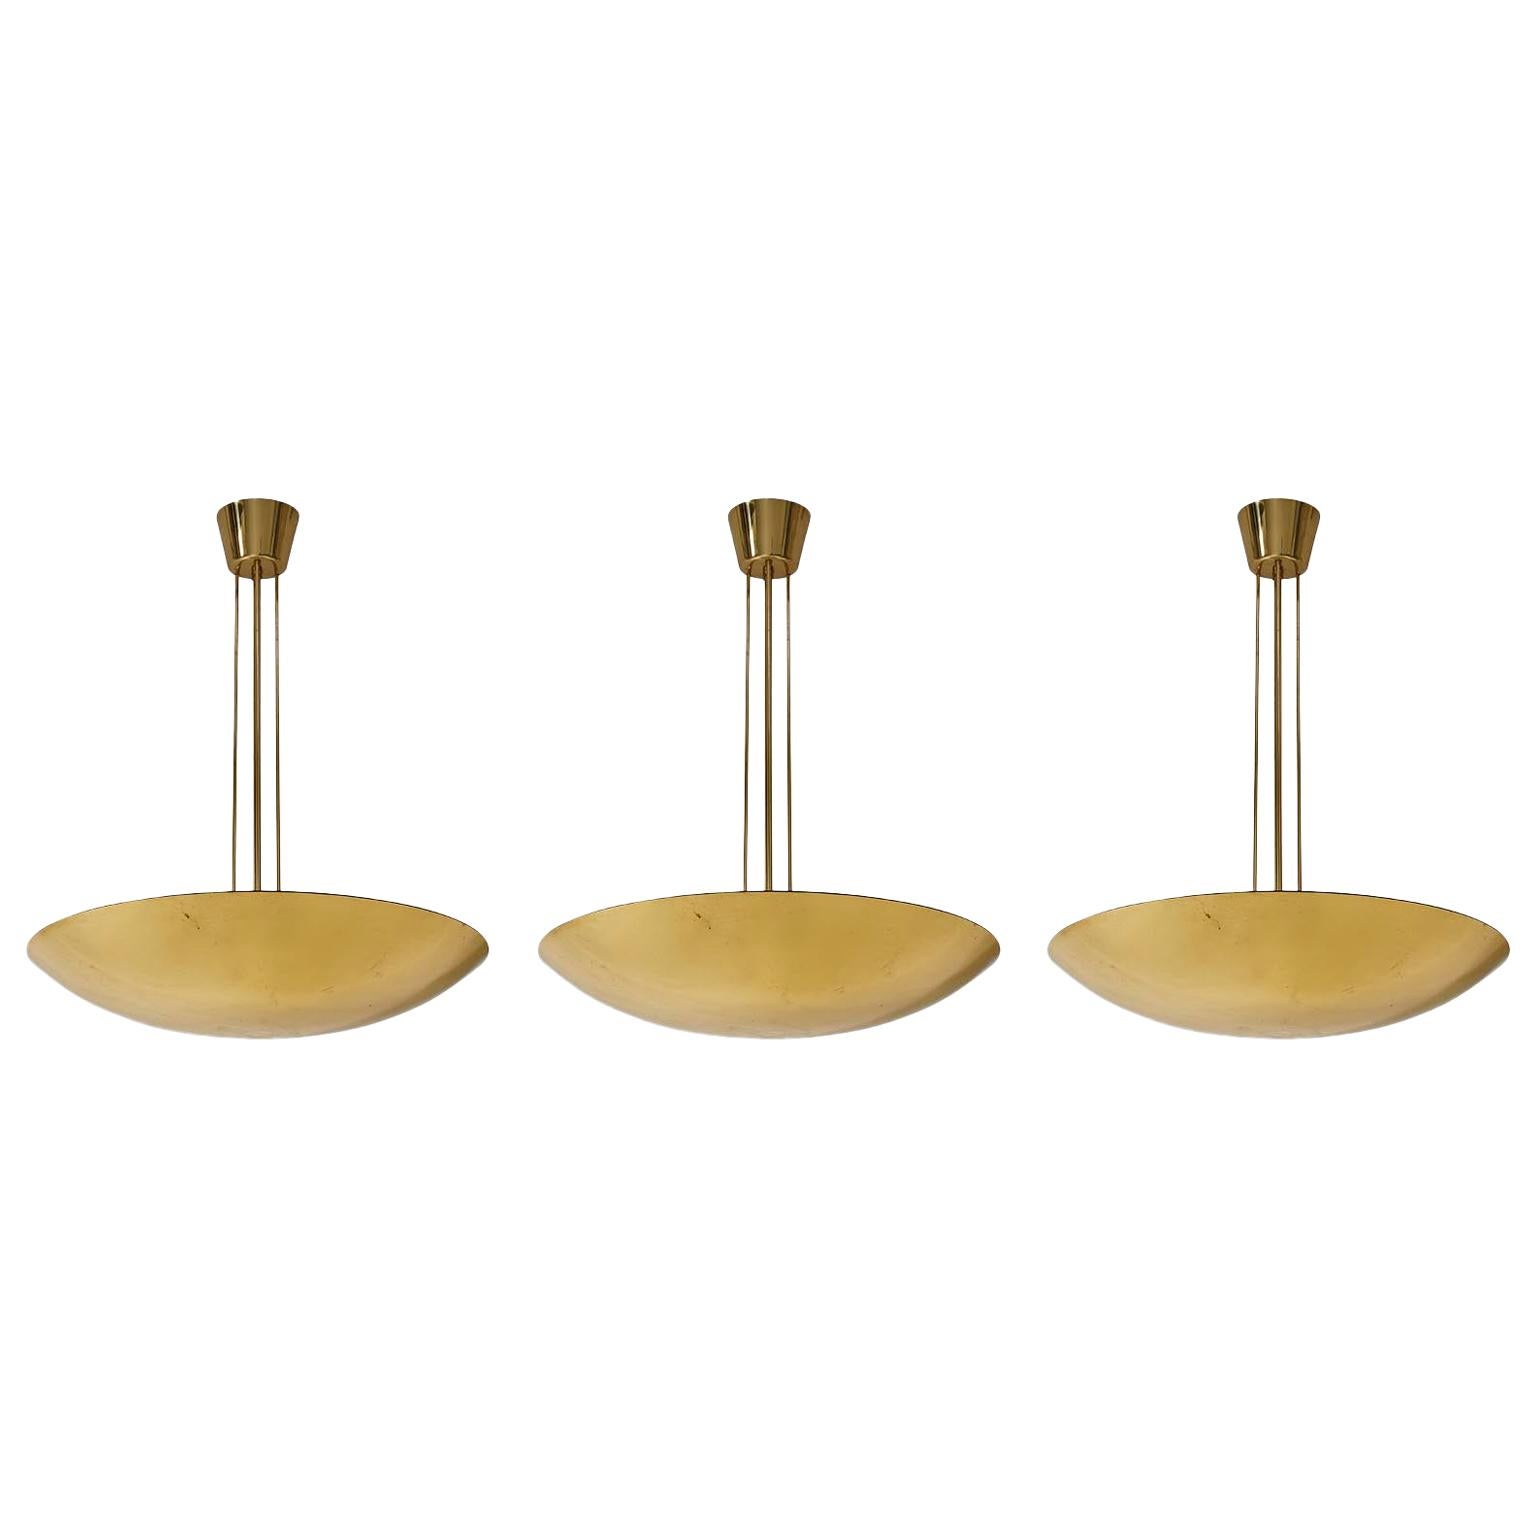 Three Kalmar Uplight Bowl Chandeliers Pendant Lights, Polished Brass, 1970